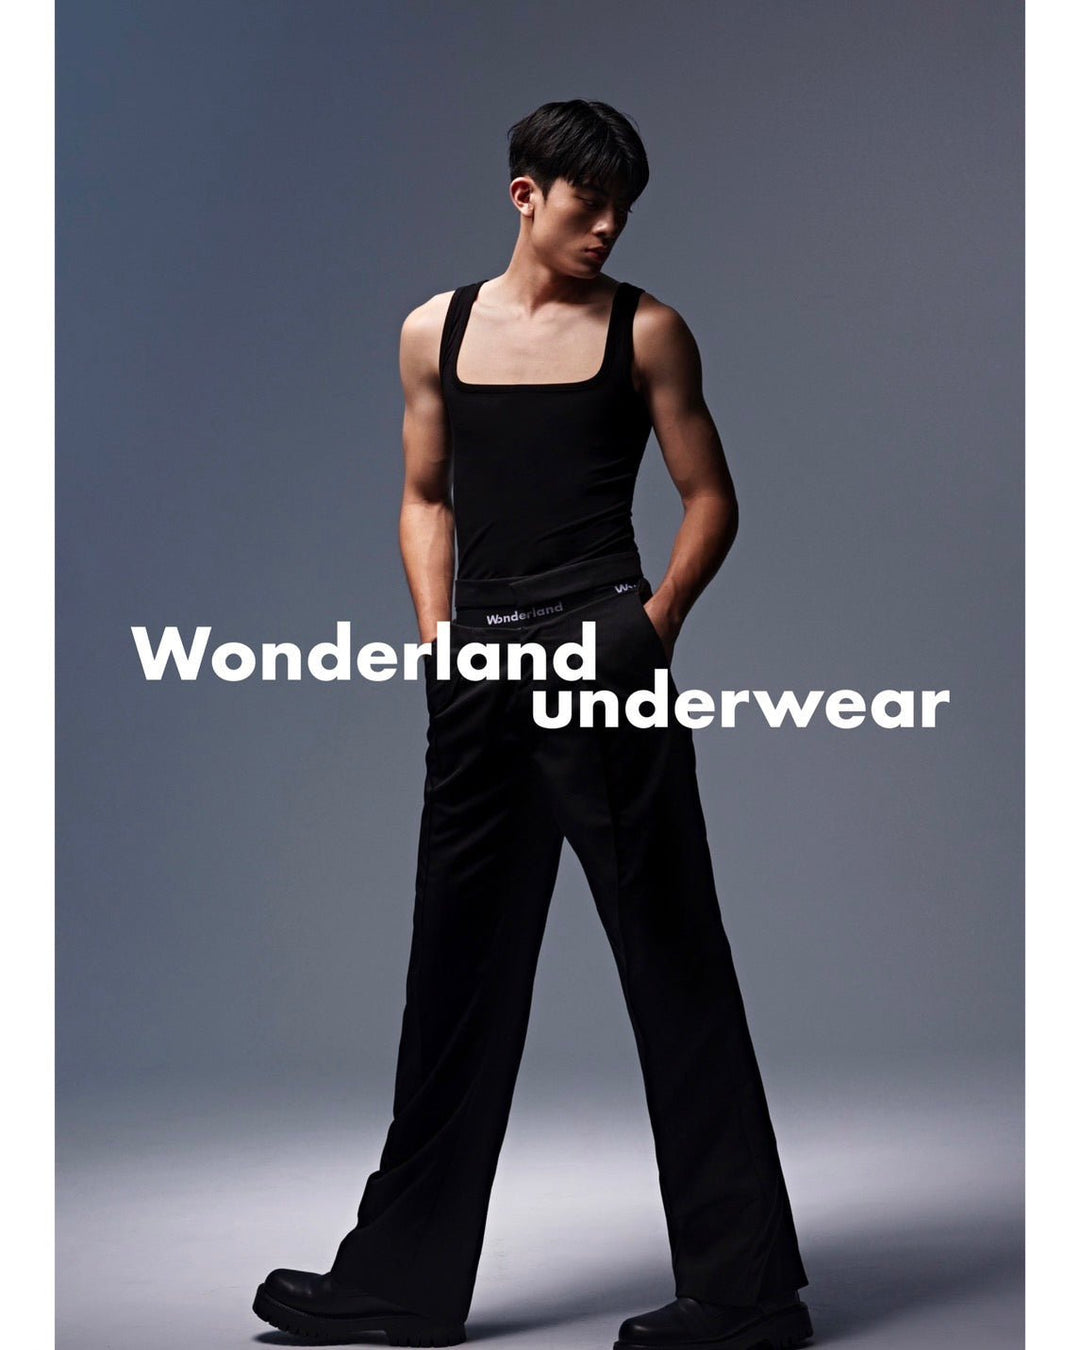 Wonderland方領螺紋背心/Square Neck Ribbed Tank Top - Wonderland Underwear